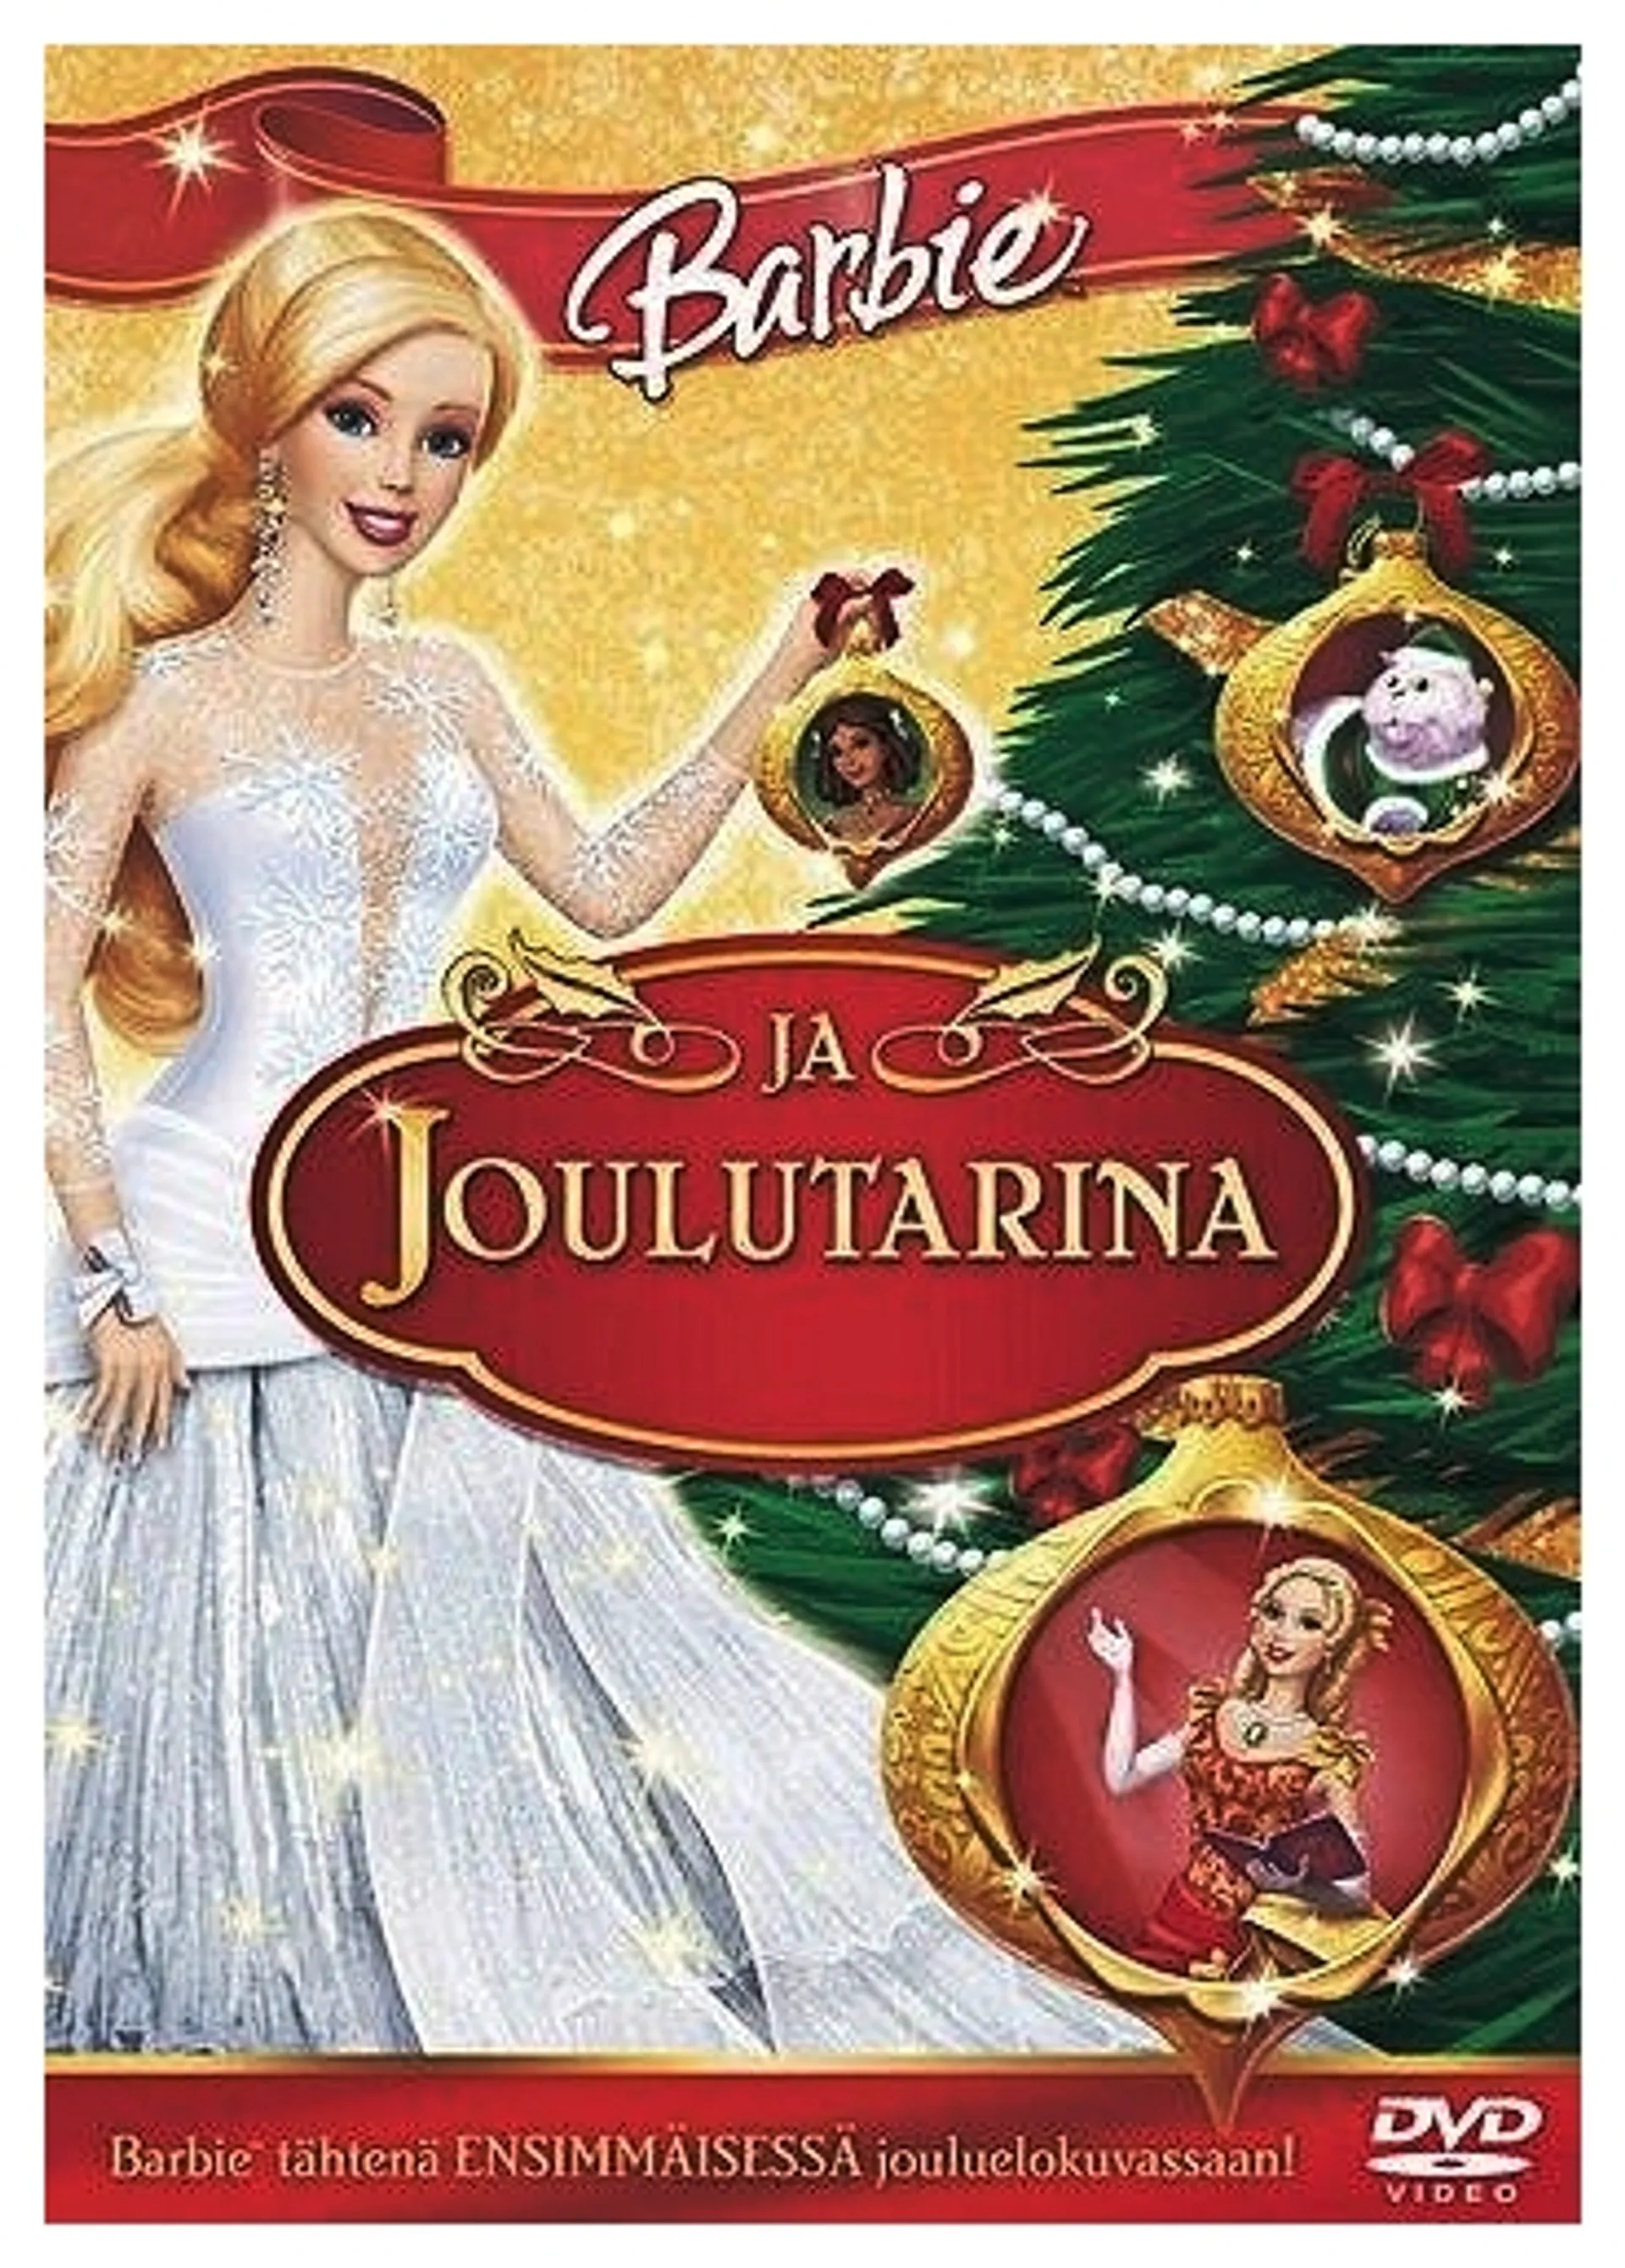 Barbie Joulutarina DVD